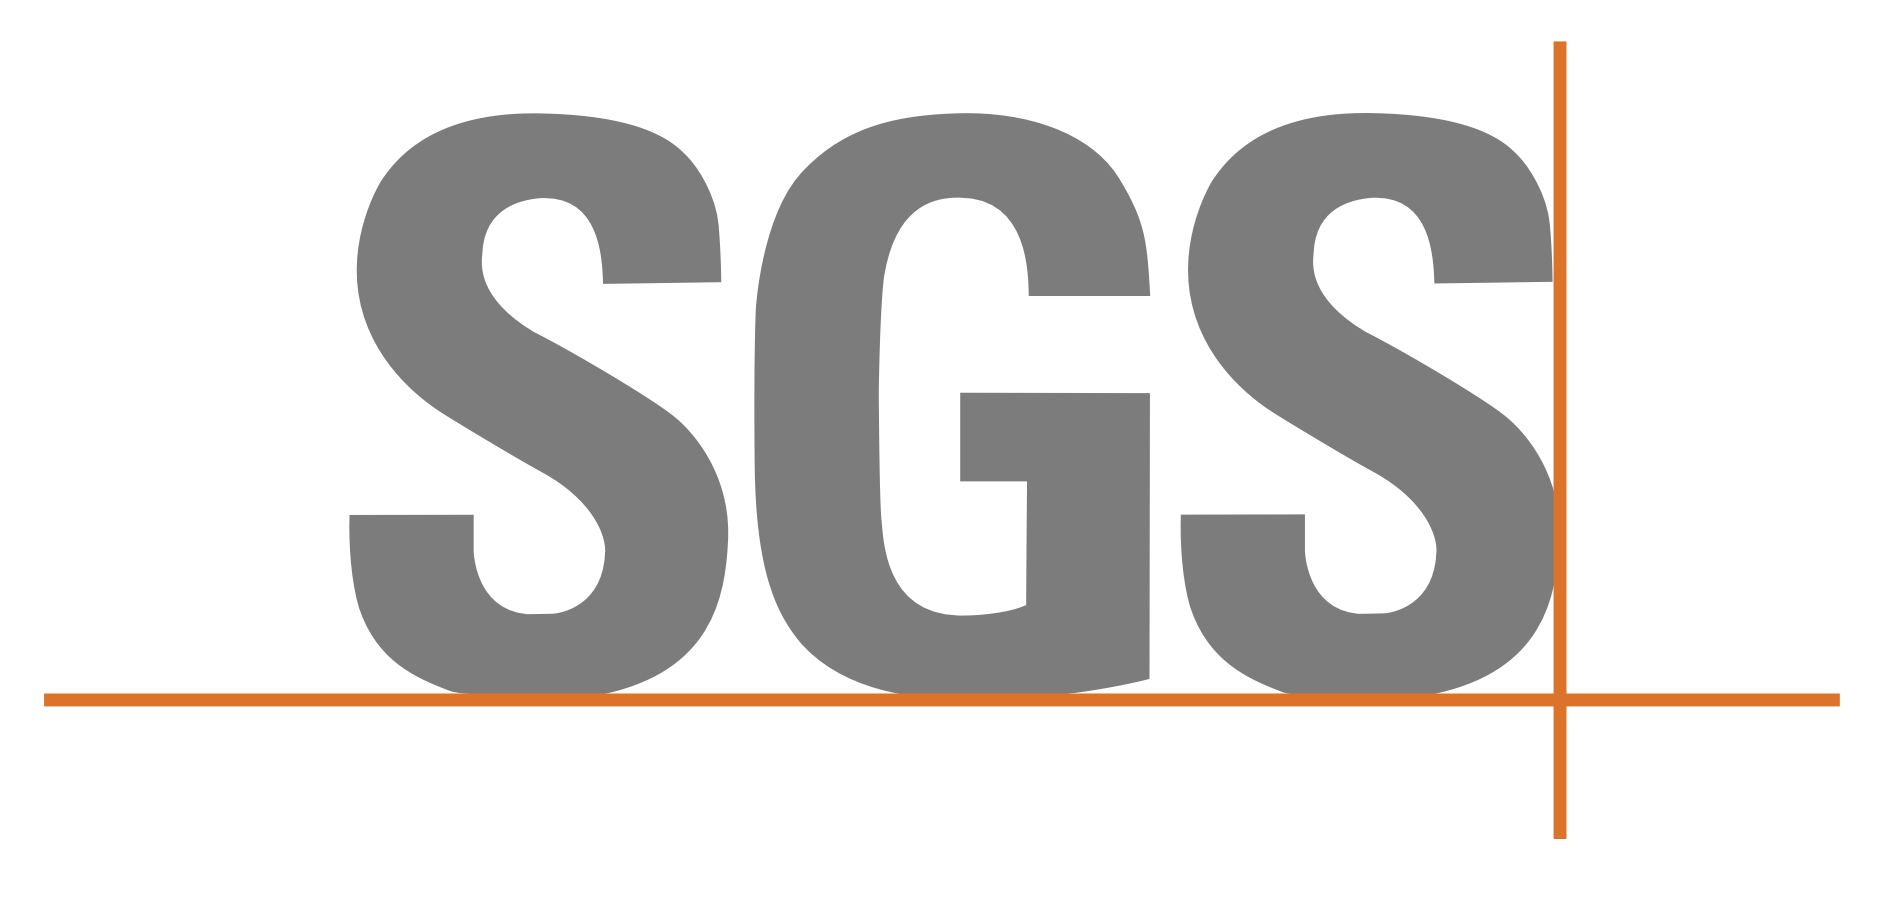 SGS通標標準技術服務有限公司